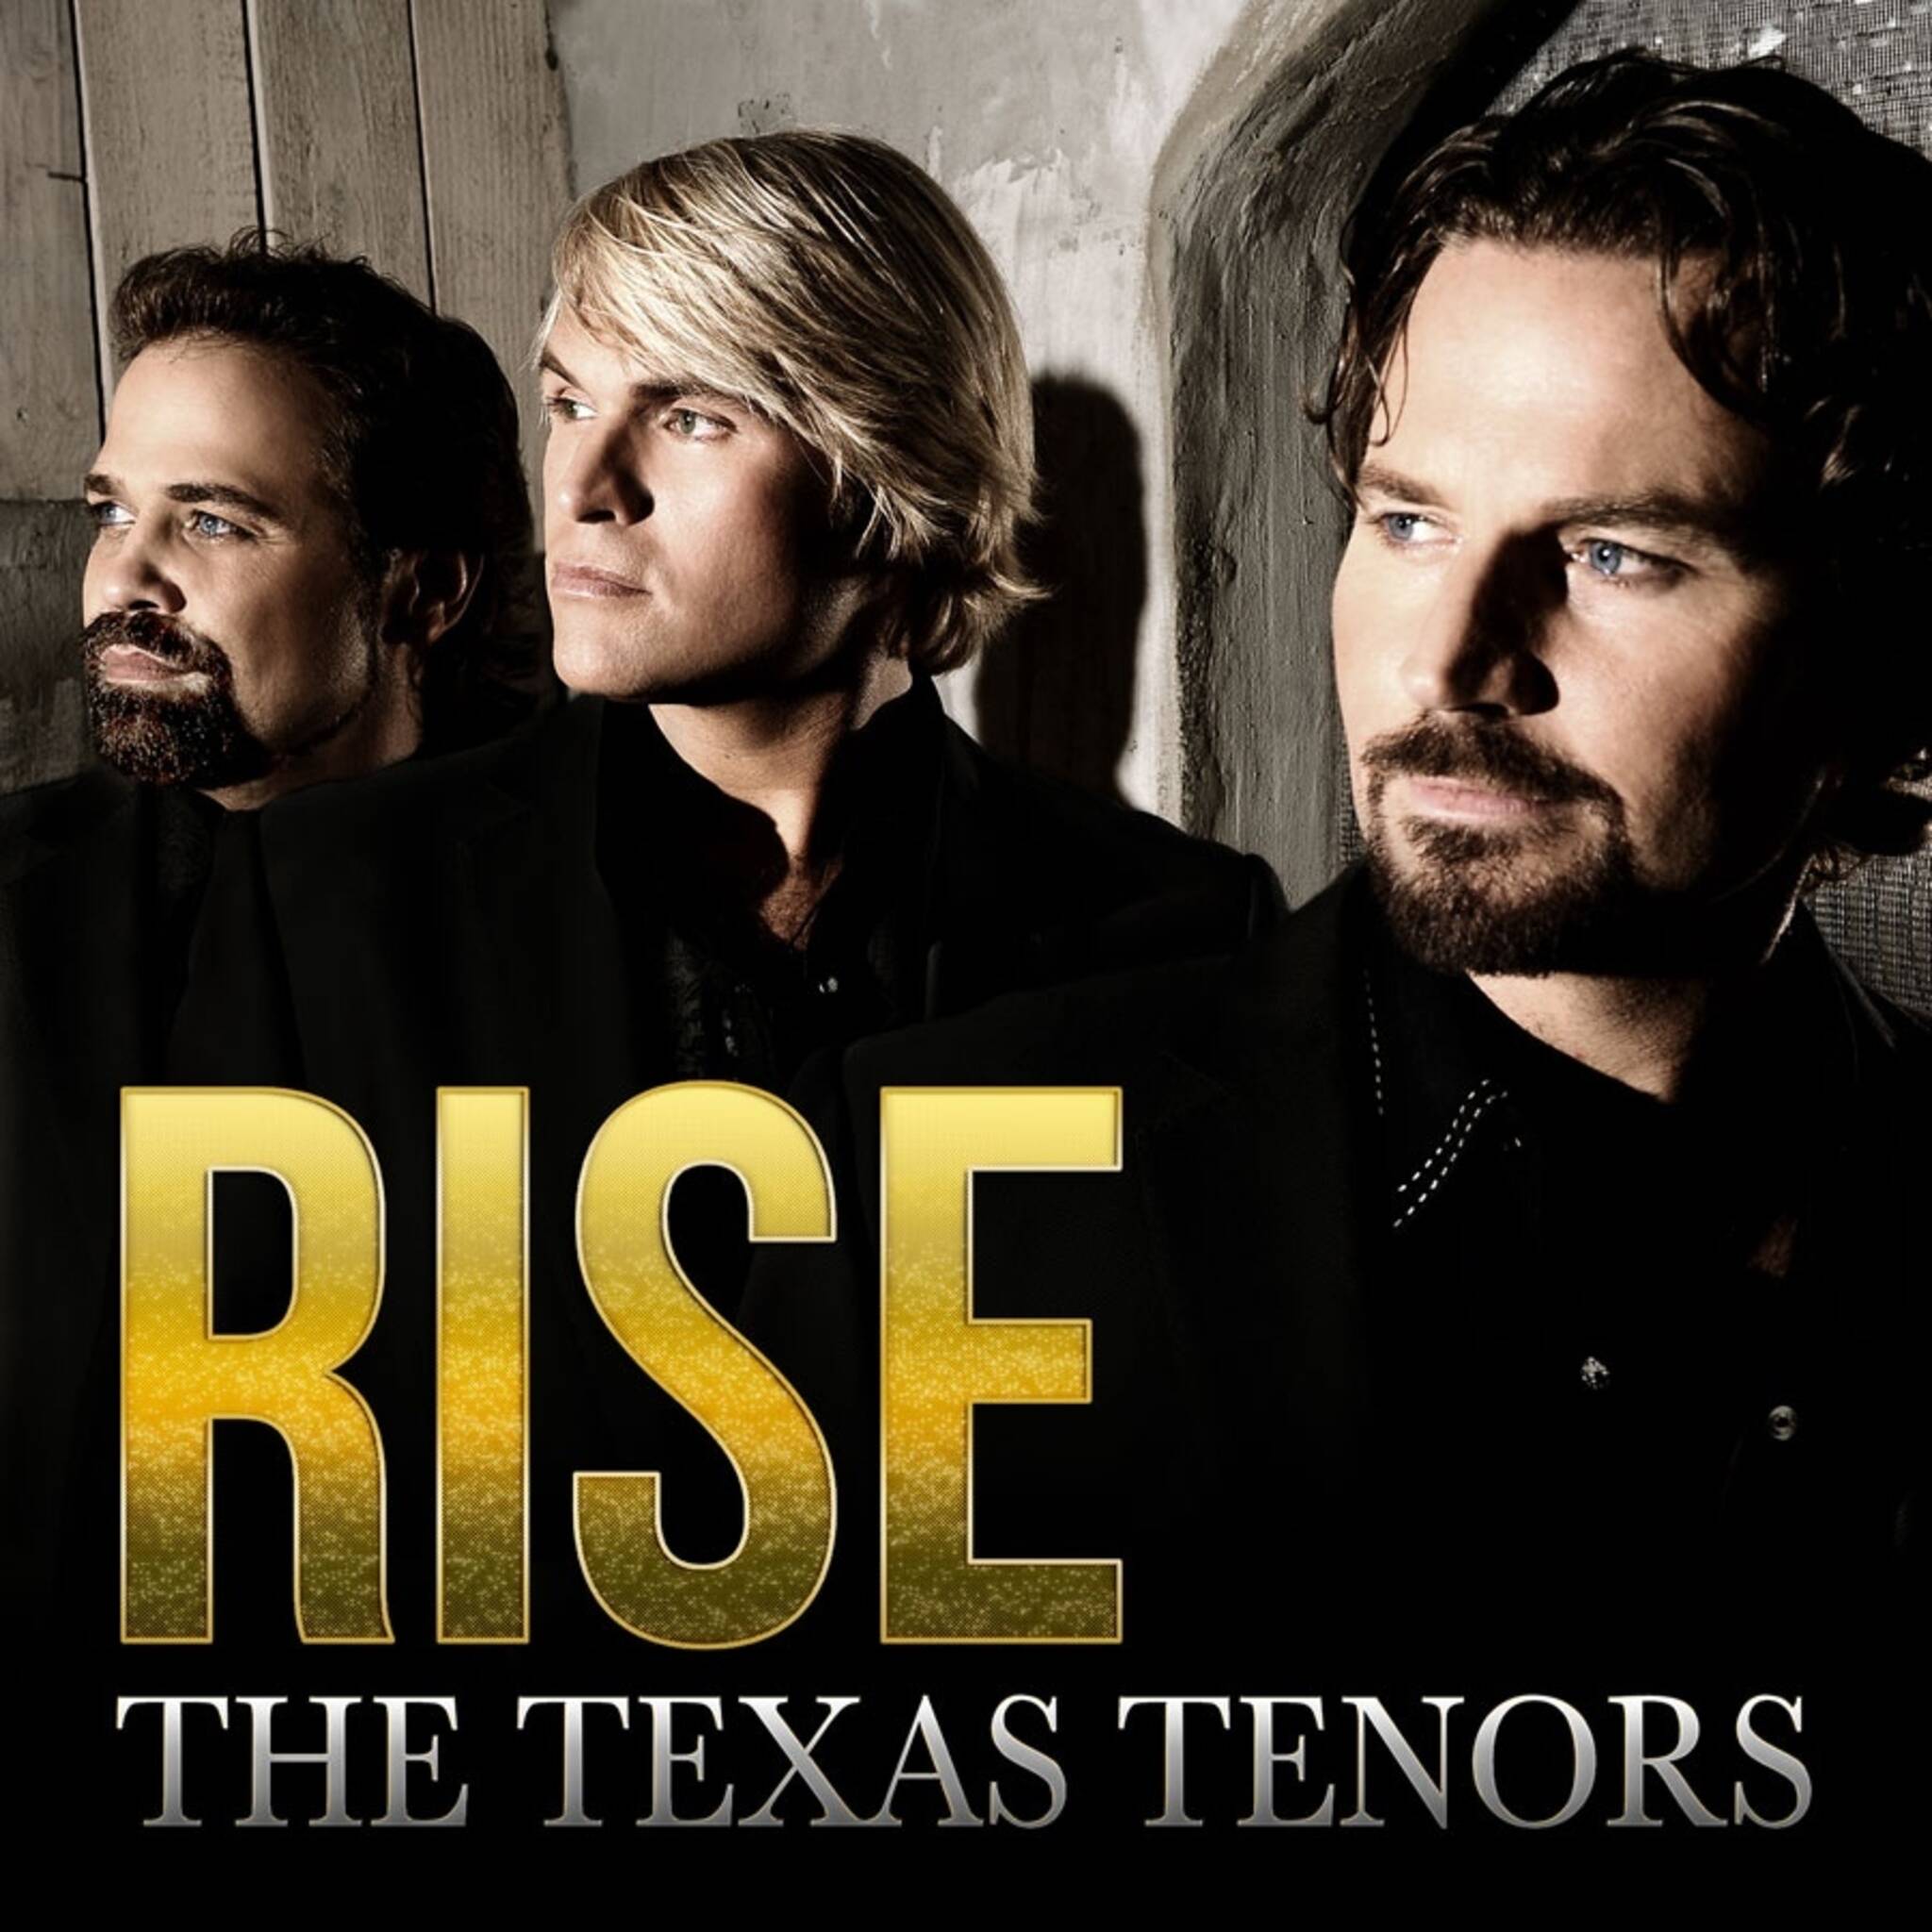 The Texas Tenors Canadian Debut Billboard 1 Classical